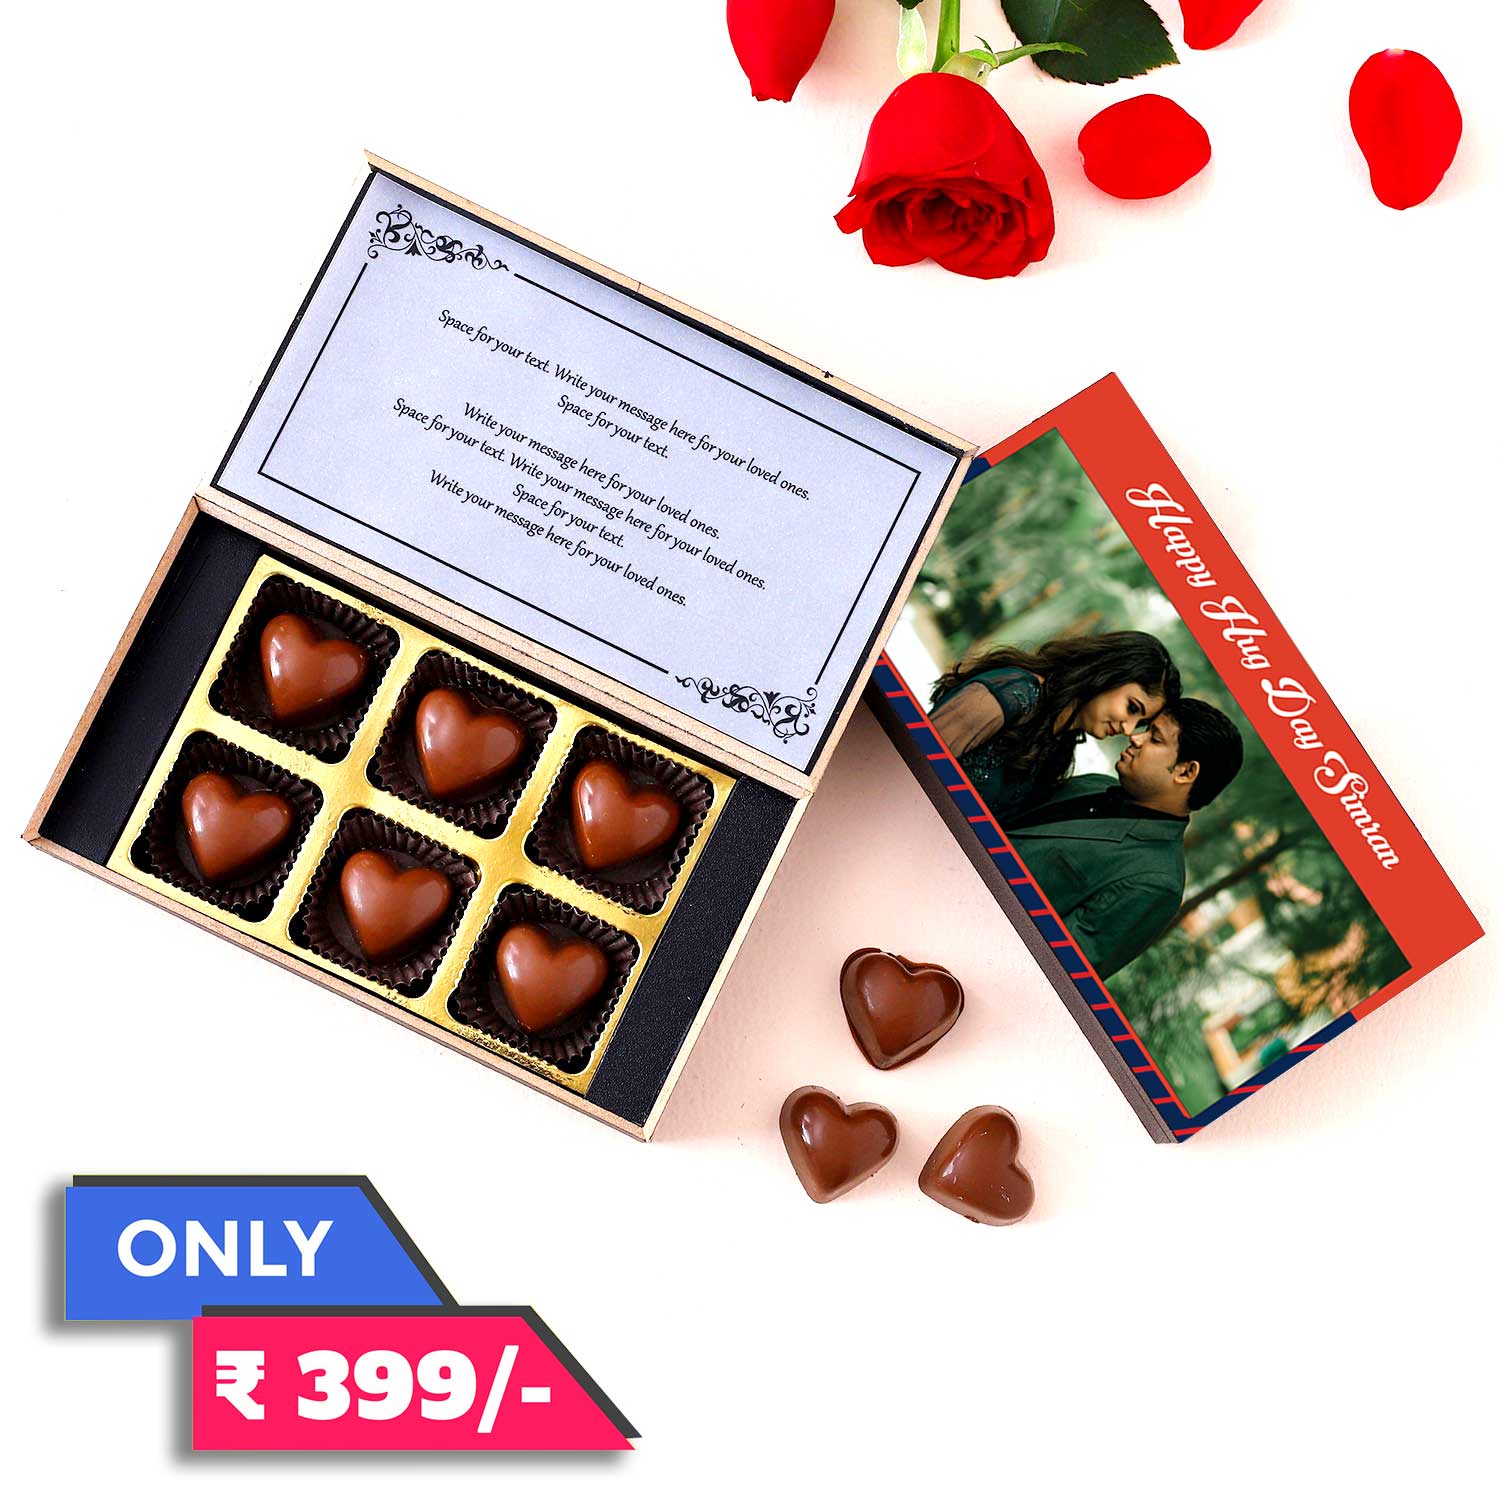 Send Hug Day Premium Personalised chocolate gift